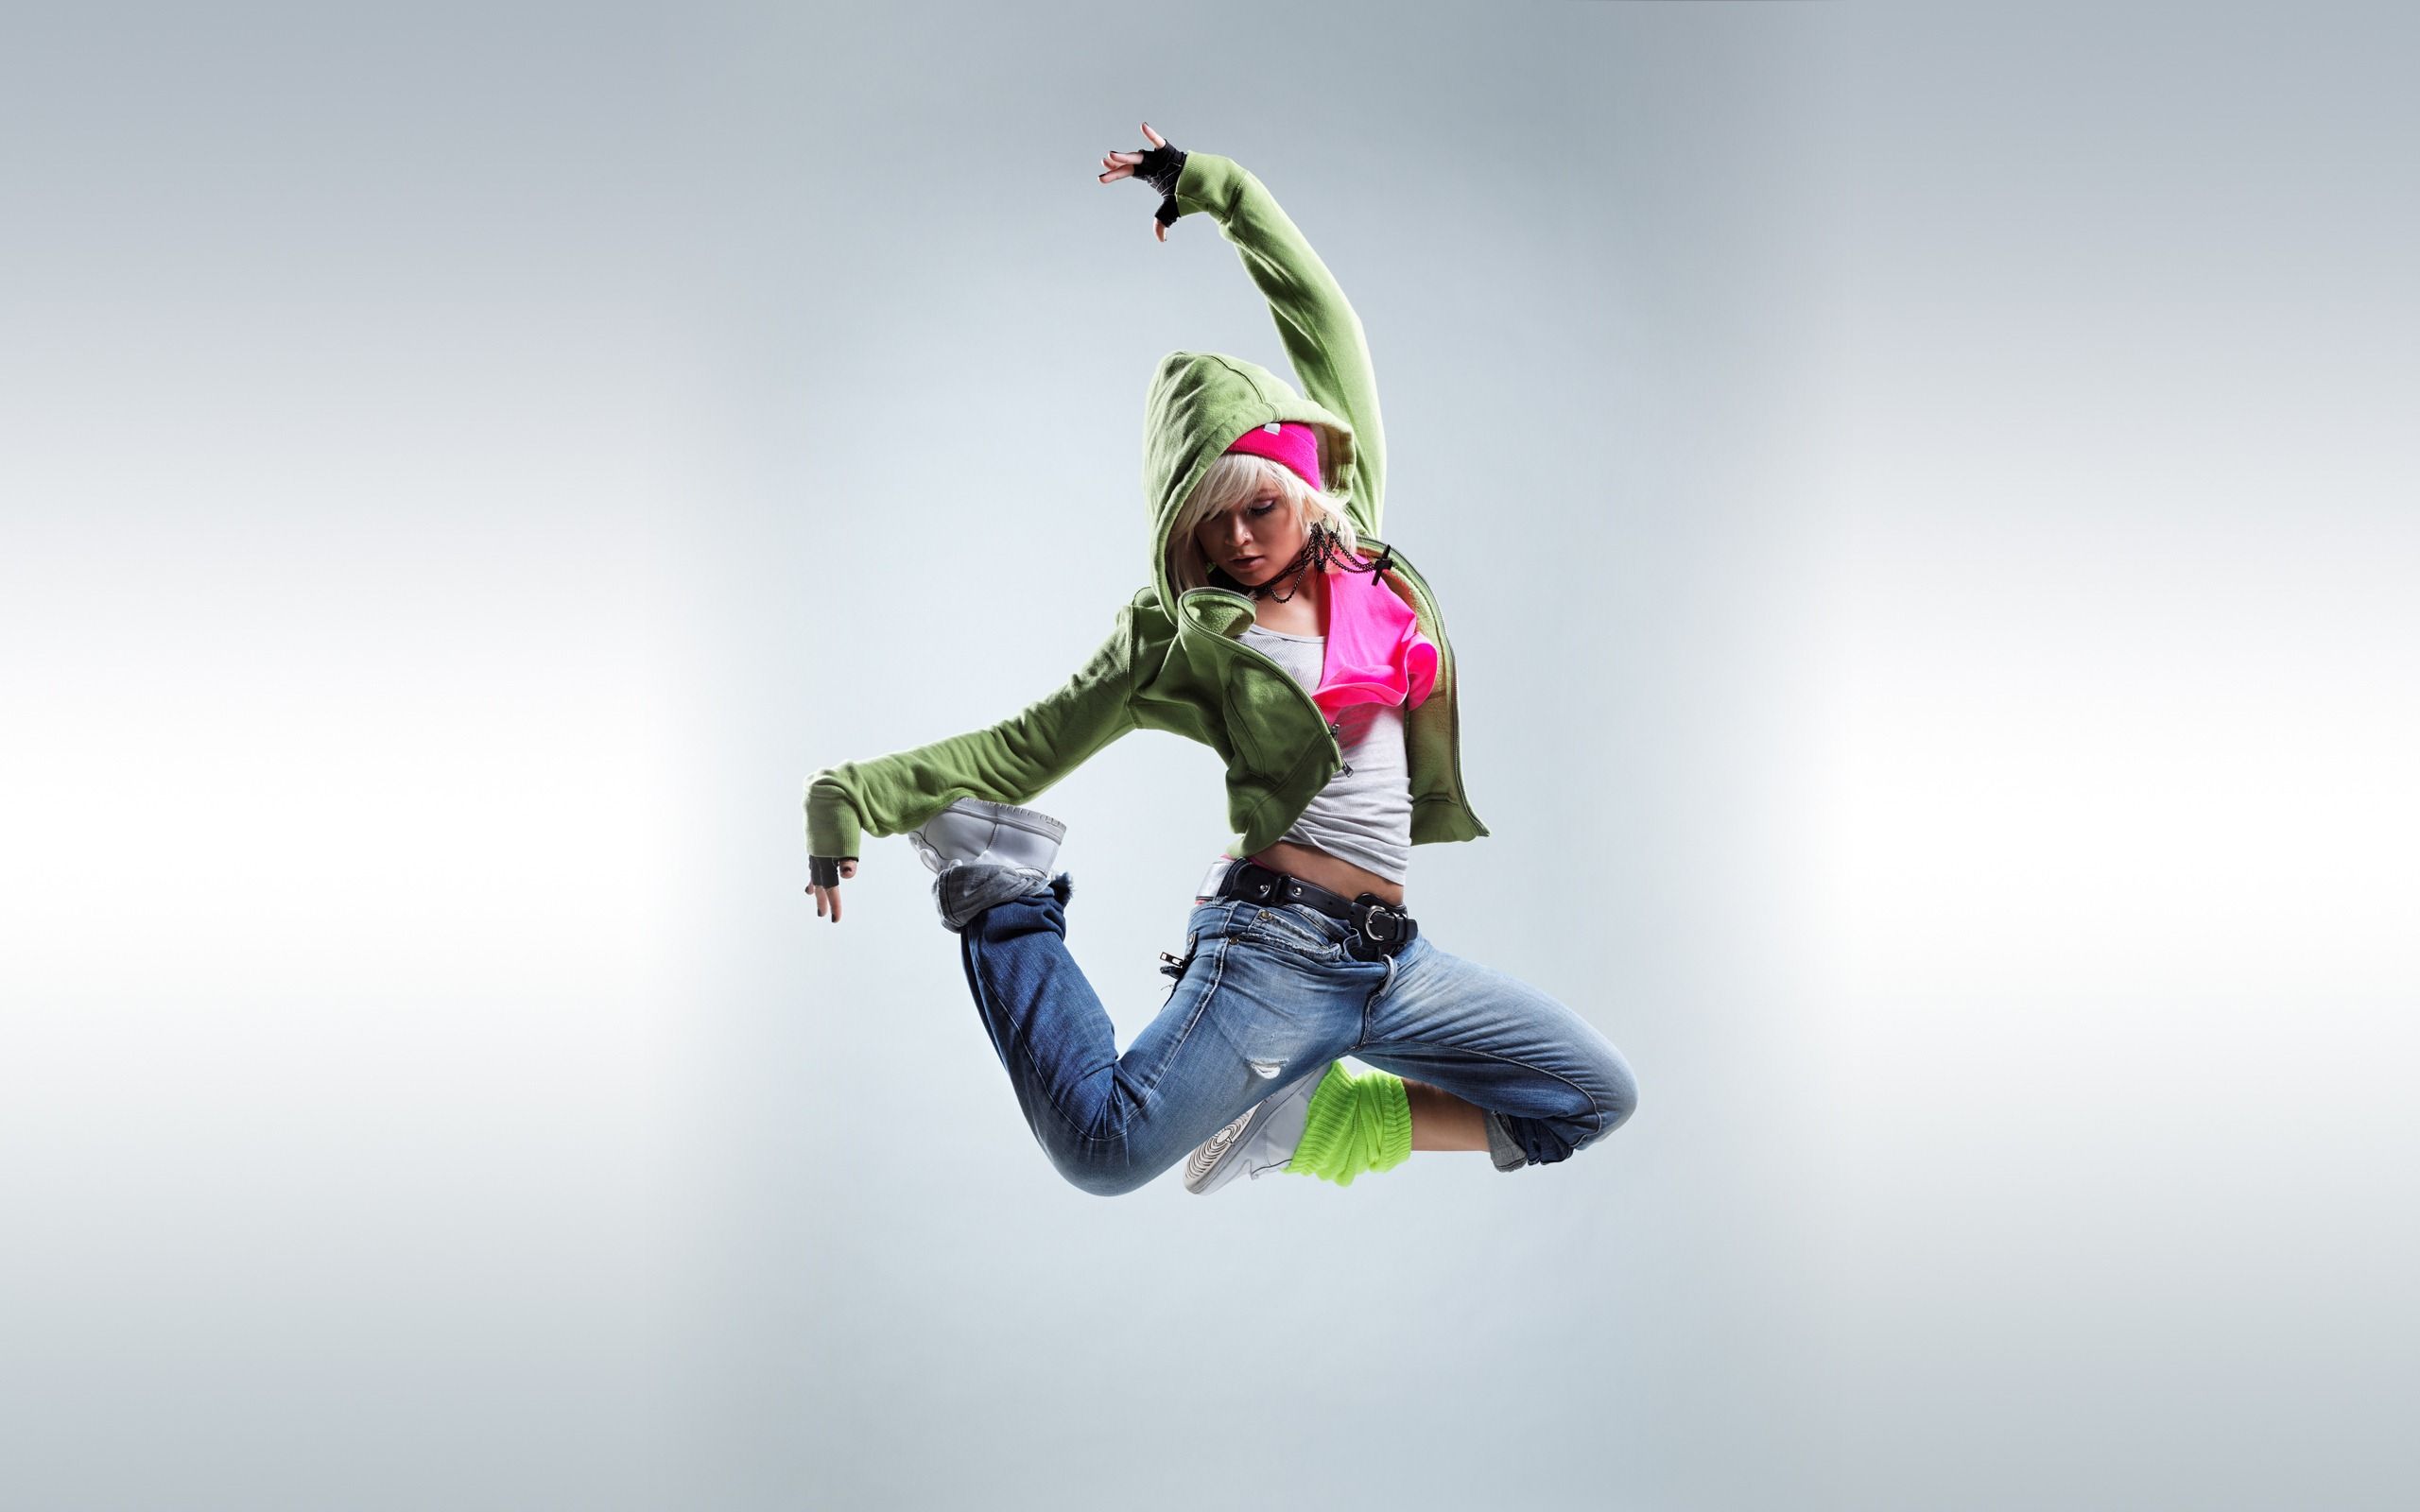 Best Dance Wallpaper 6 Dance Picture in Jump Wallpaper for Free. Dance picture, Dance poses, Dance background